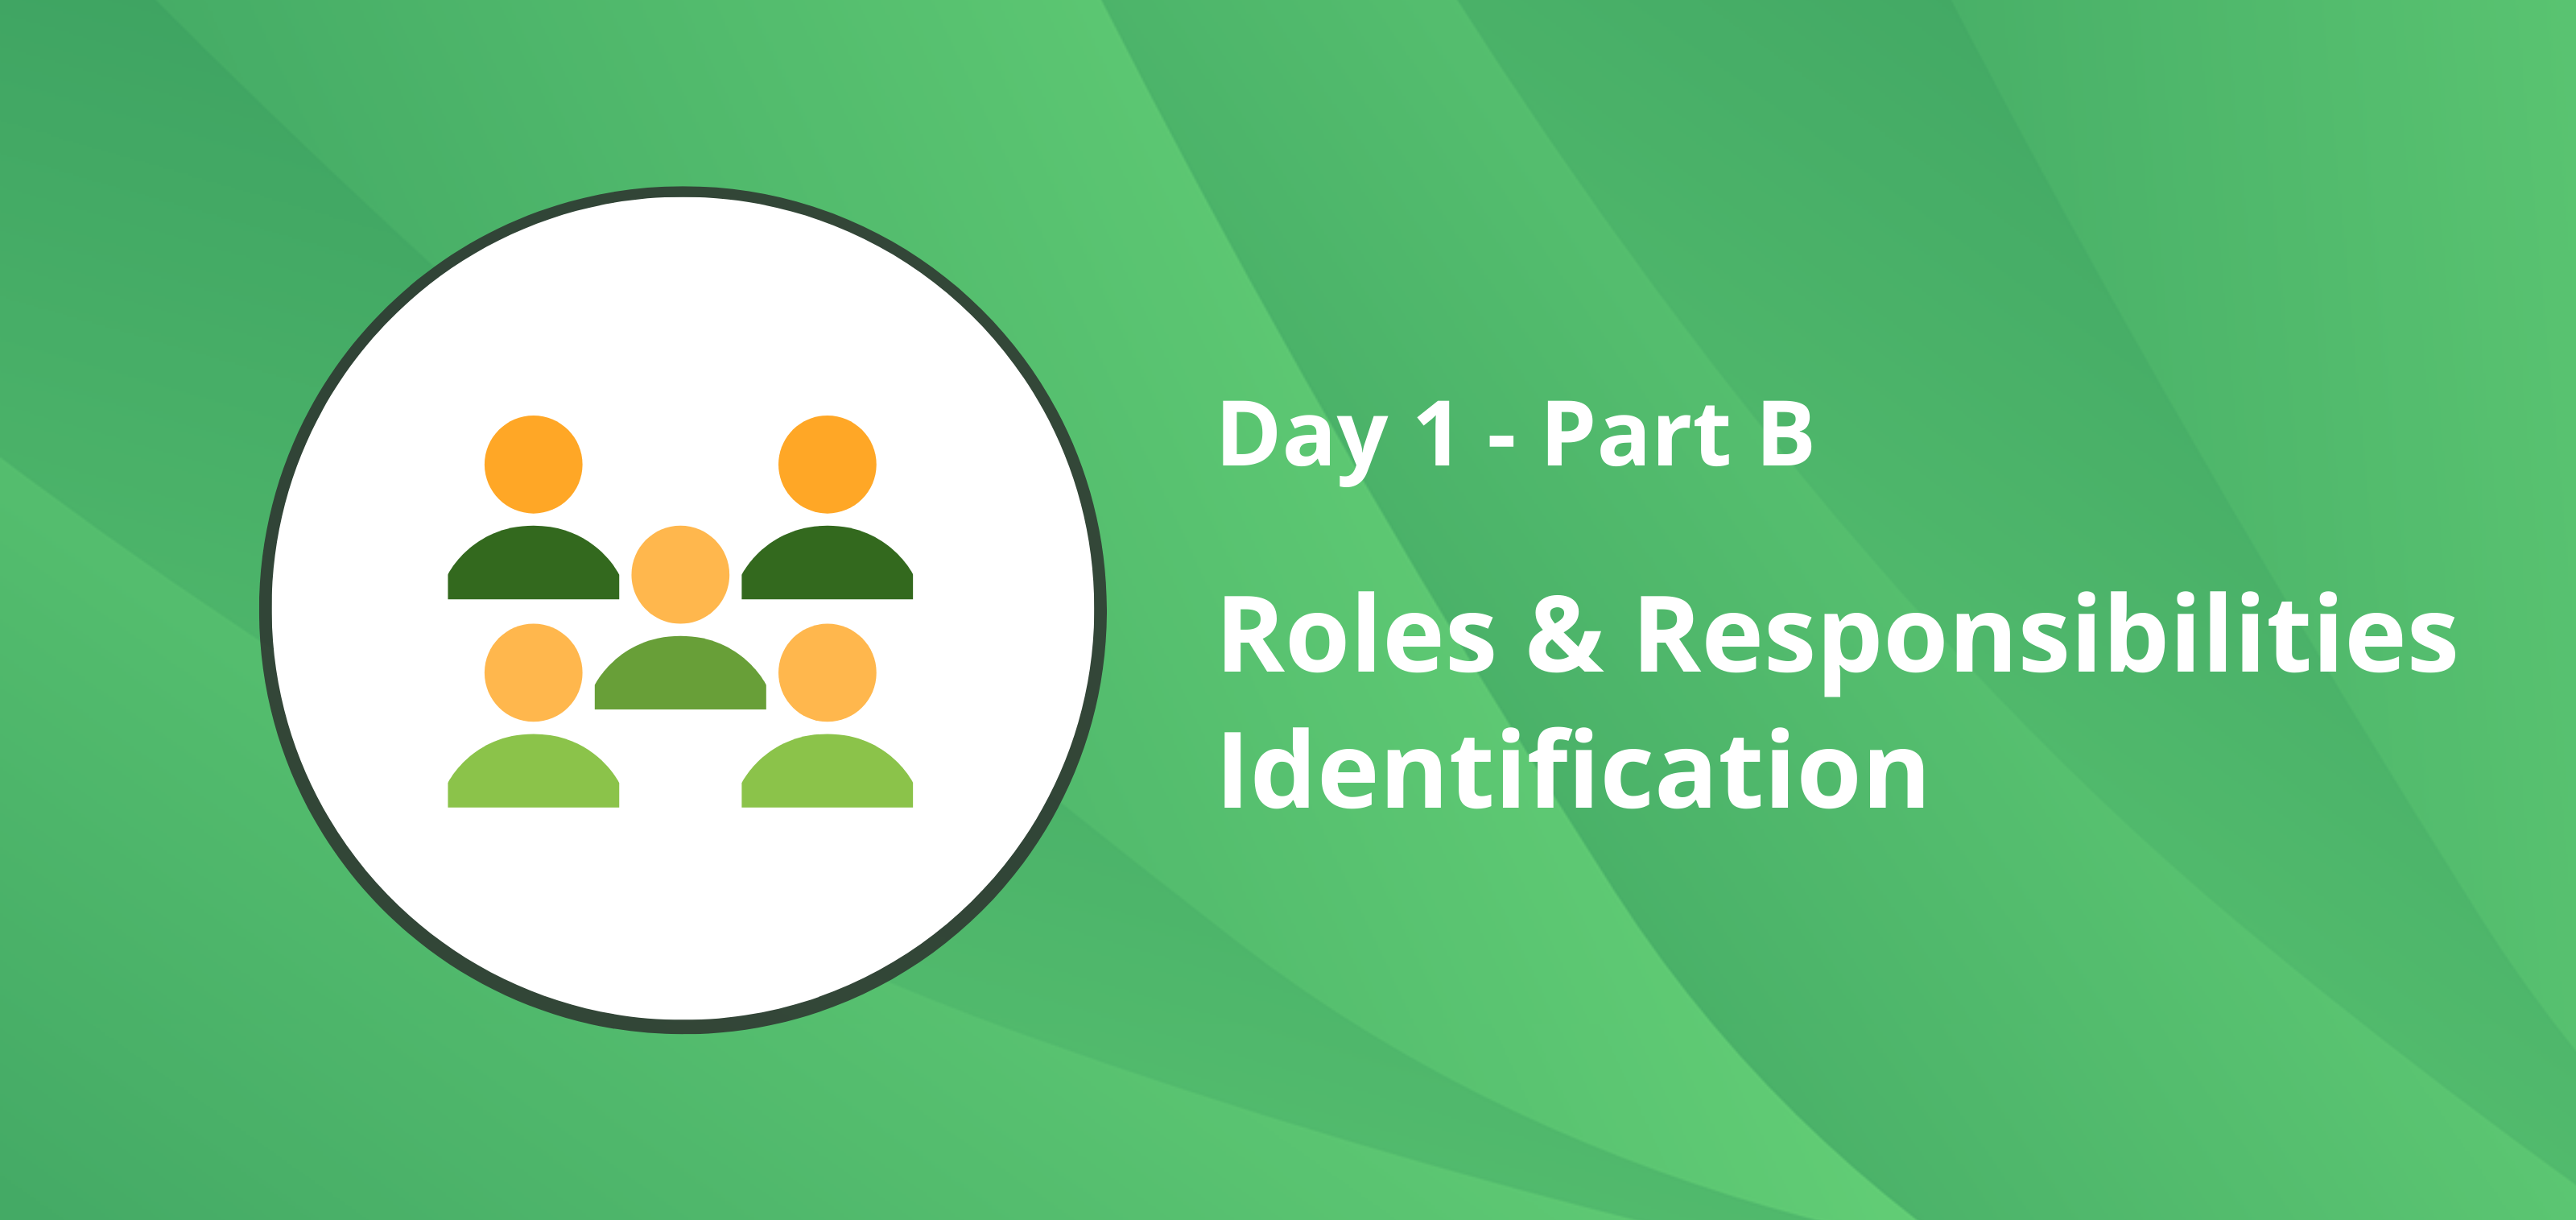 Roles & Responsibilities Identification